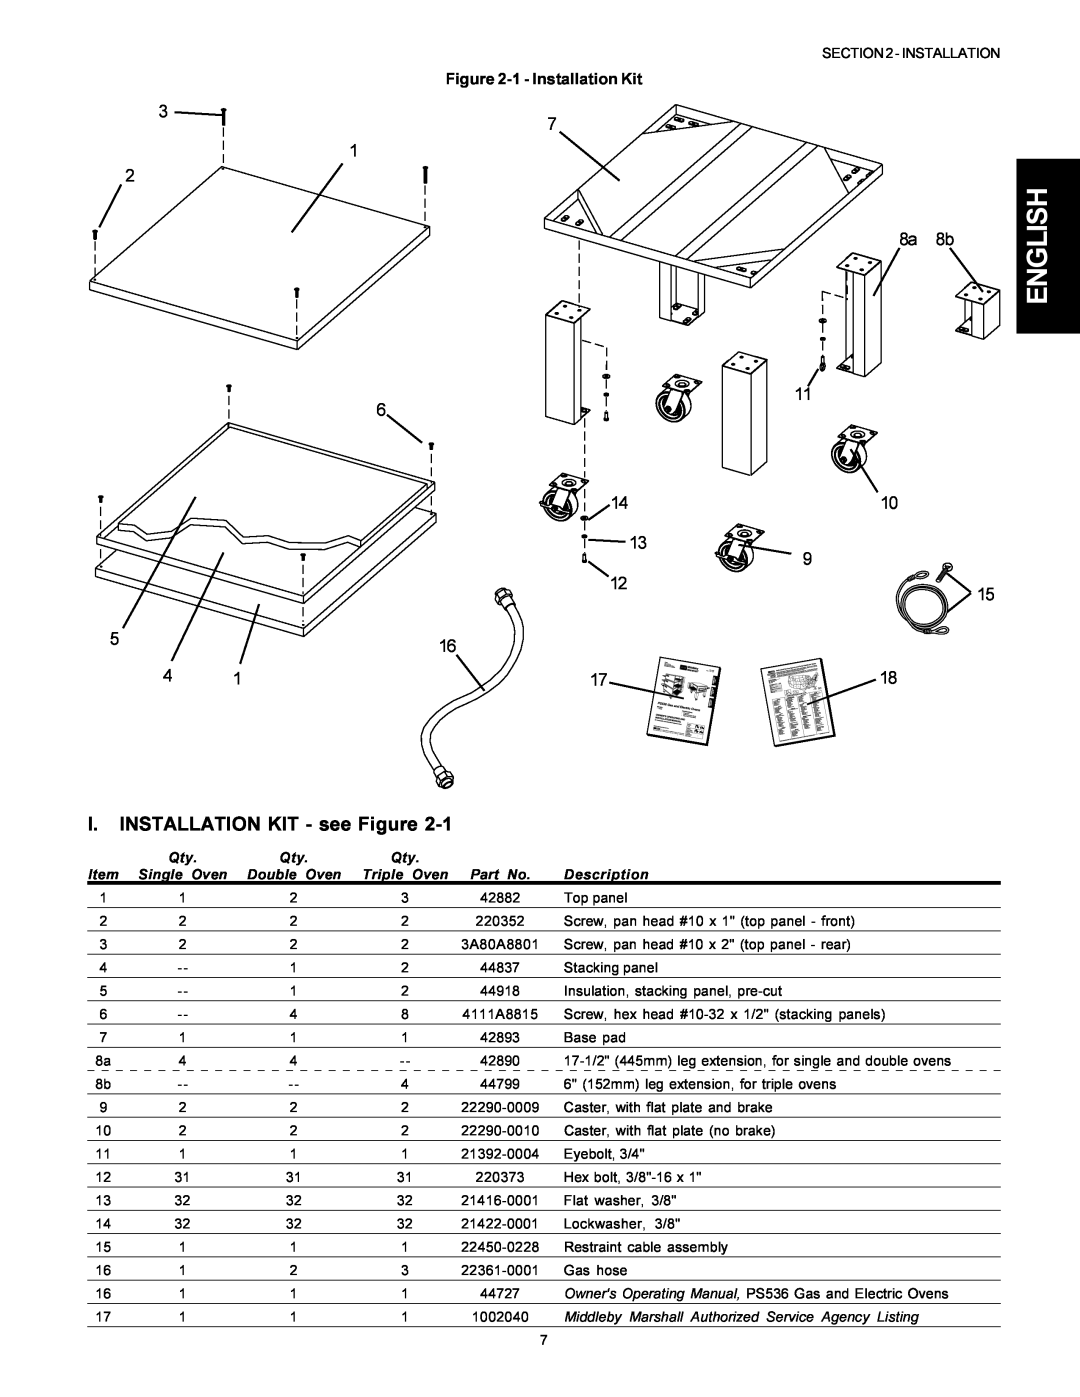 Middleby Marshall Model PS536 installation manual English, I. INSTALLATION KIT - see Figure, 1 - Installation Kit 